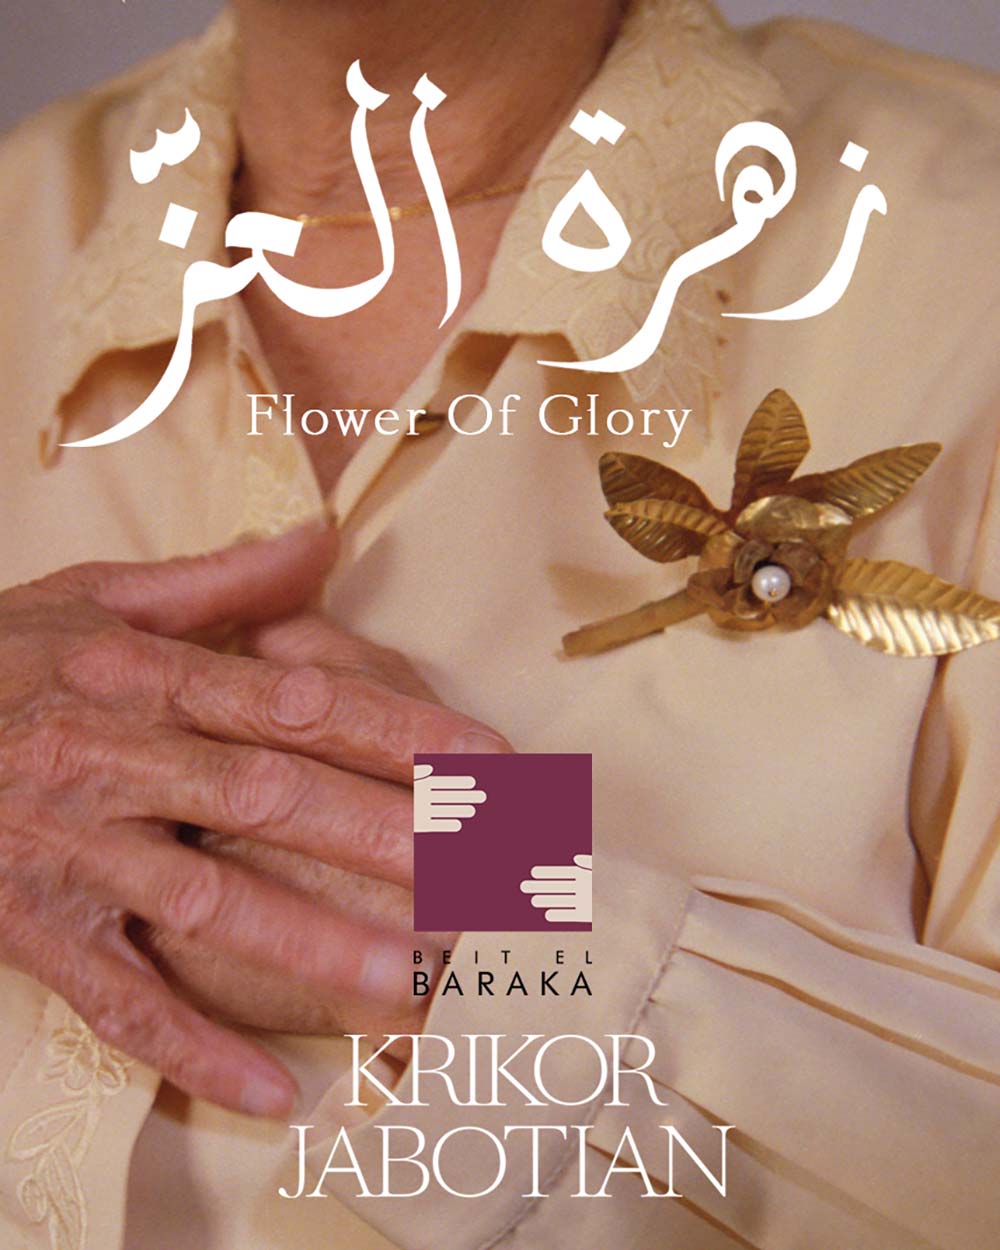 Krikor Jabotian - Beit El Baraka Collaboration - “Flower Of Glory” Campaign - Forbes